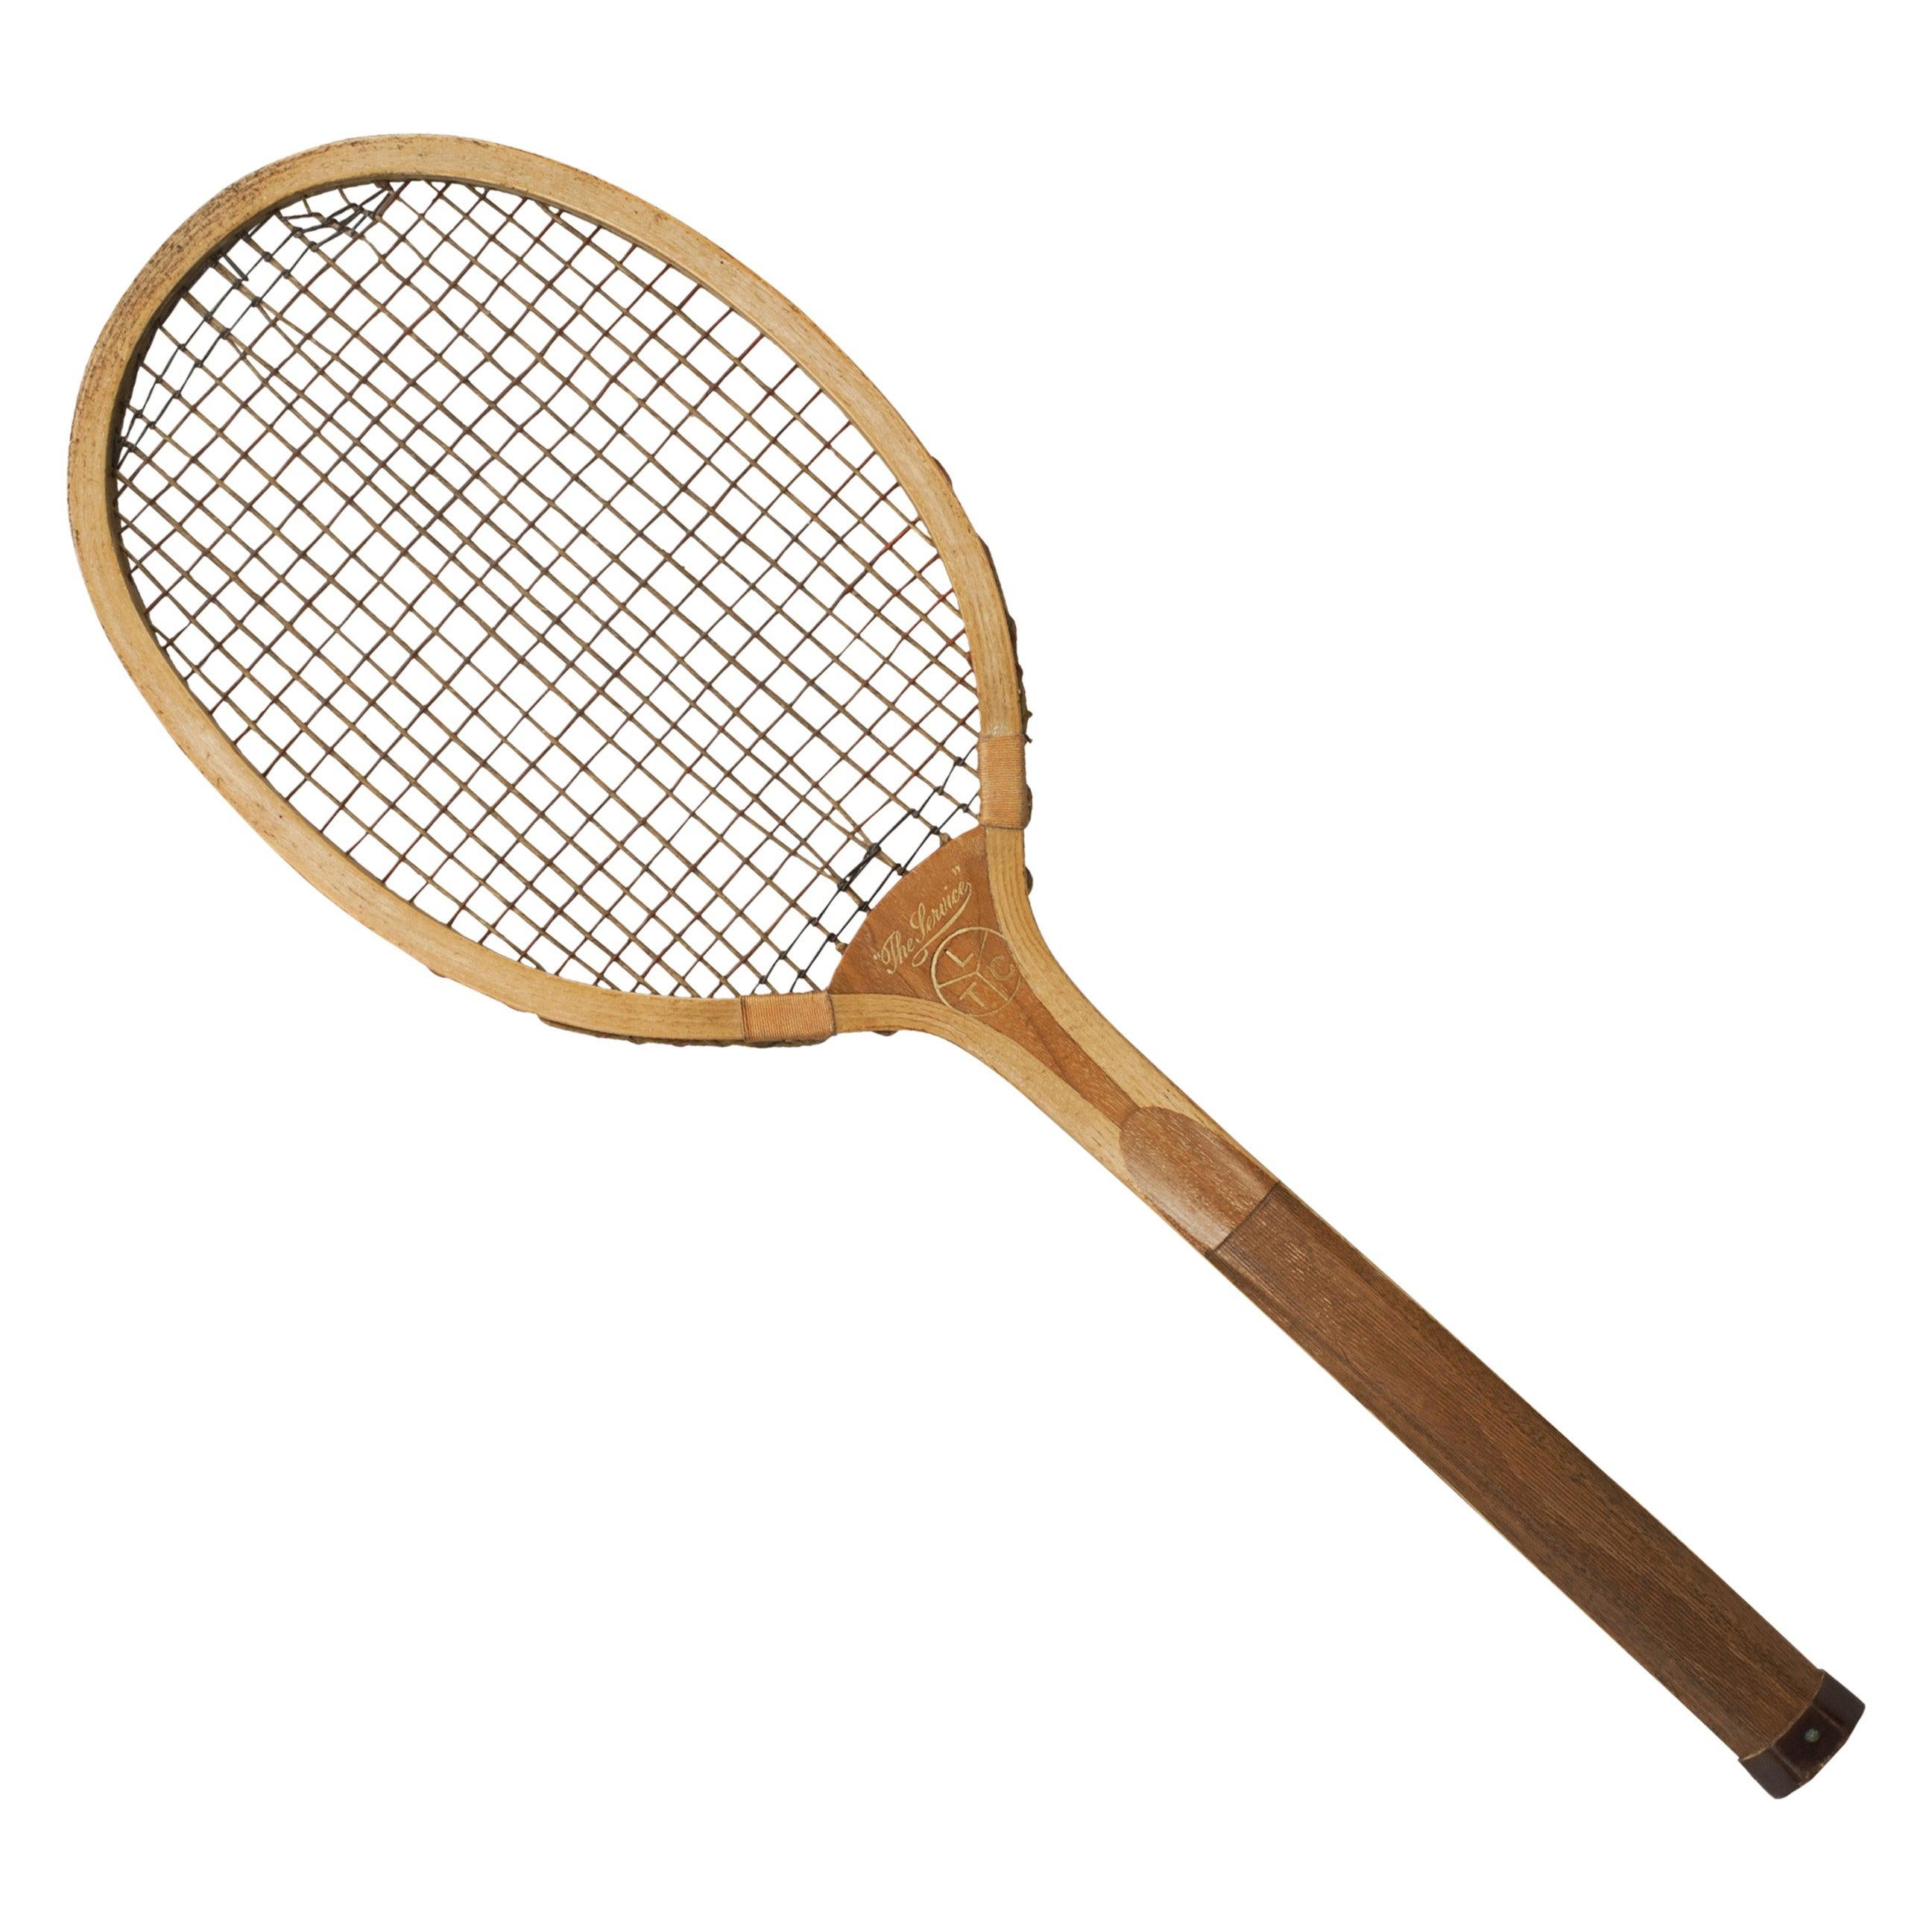 Wooden Lawn Tennis Racket, the Service, Ltc